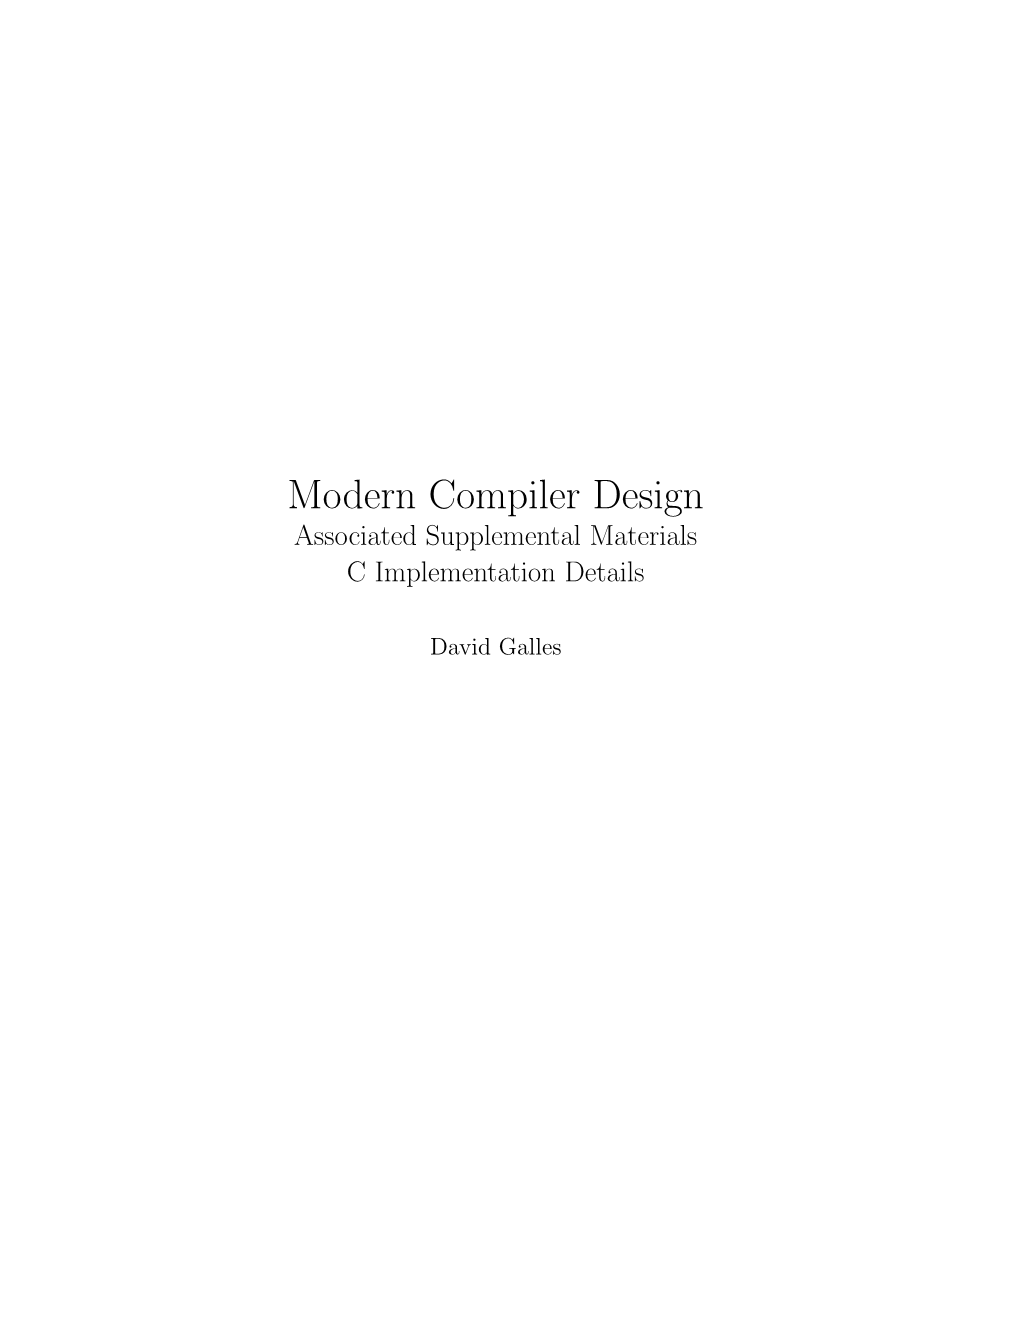 Modern Compiler Design Associated Supplemental Materials C Implementation Details